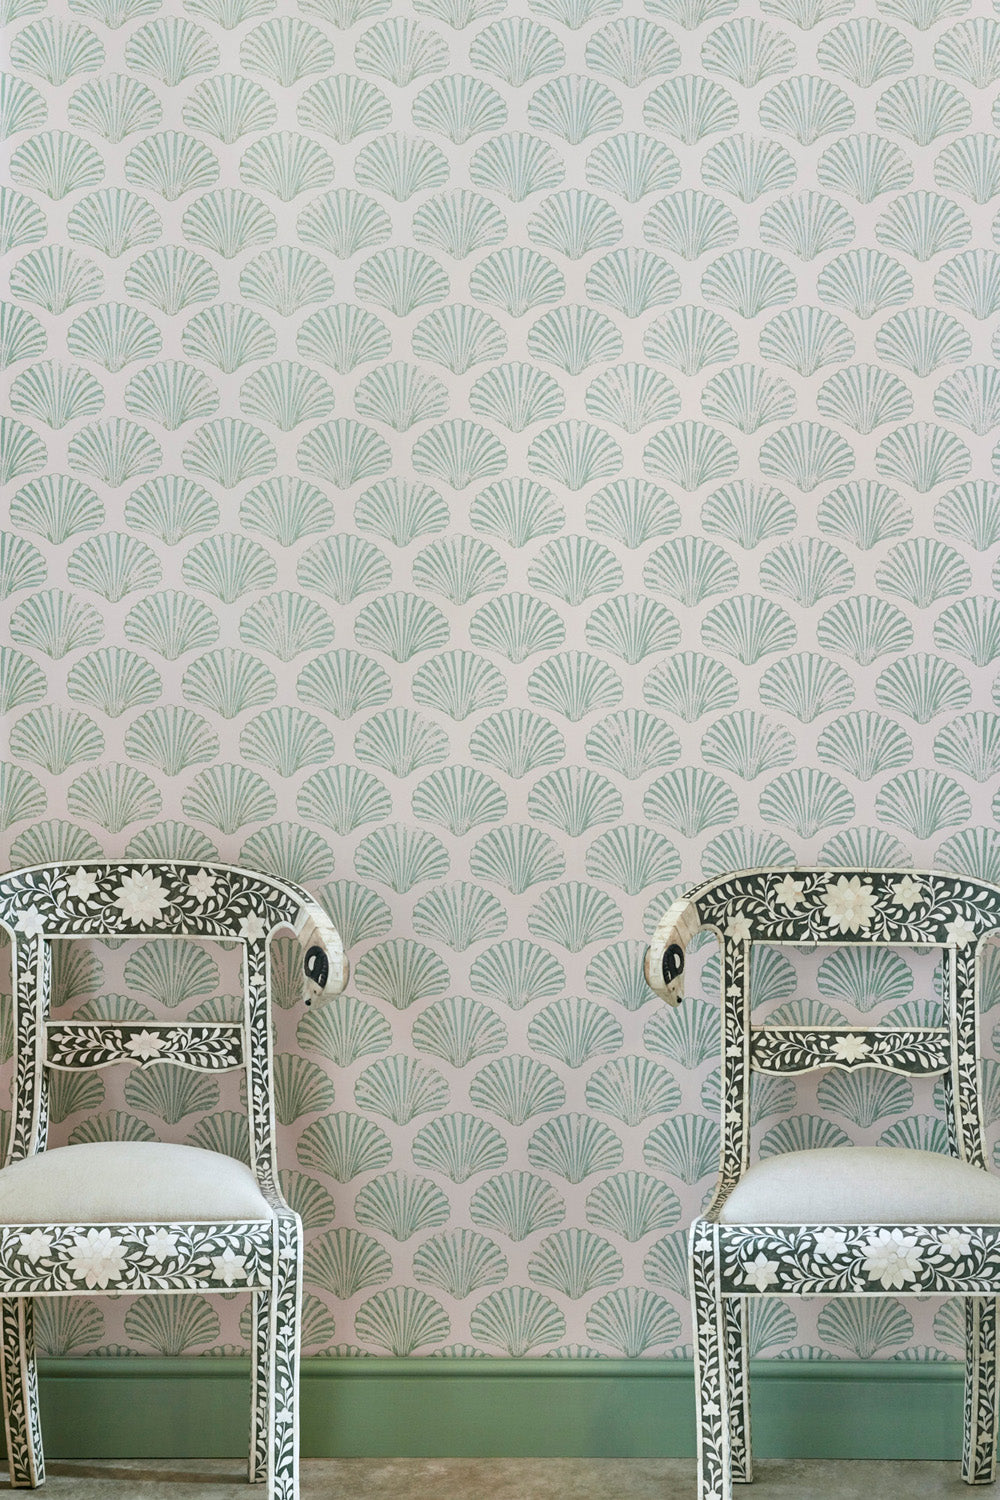 Scallop Shell Nursery Room Wallpaper - Green